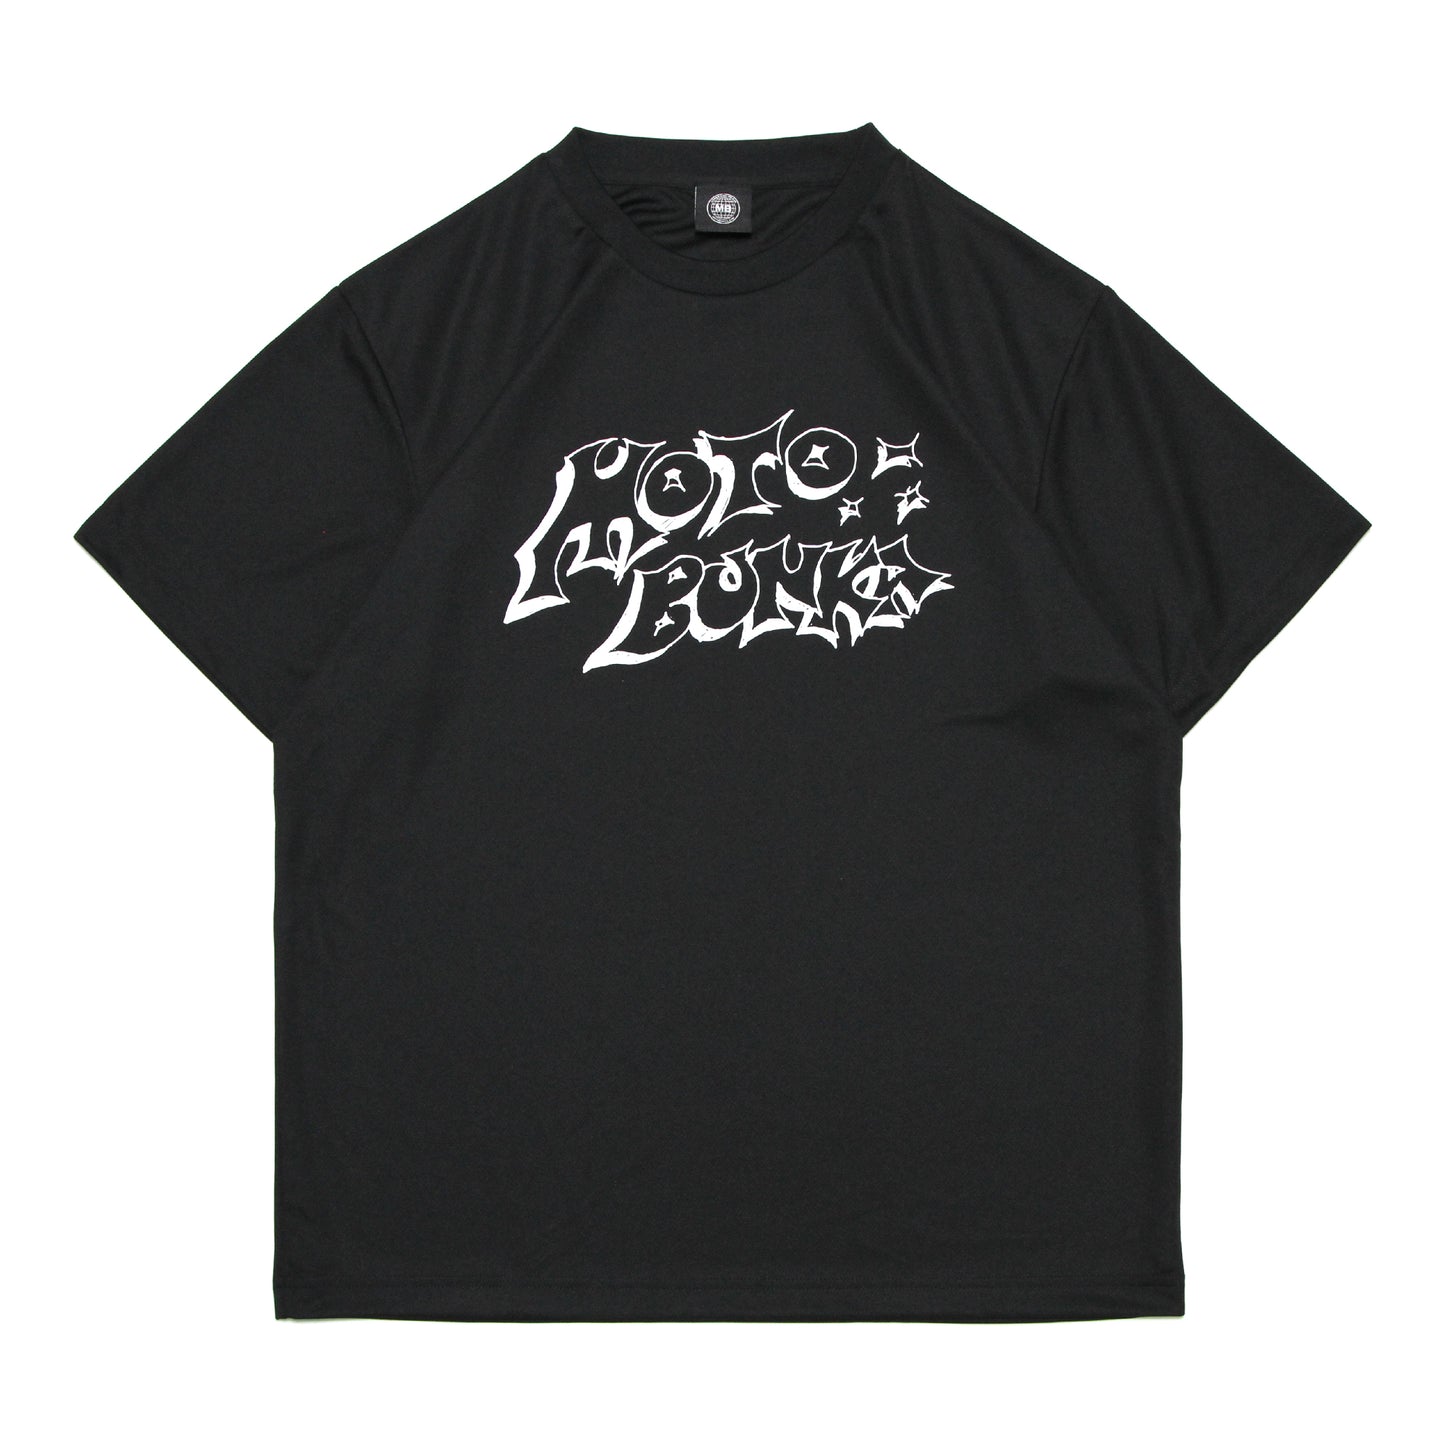 MOTO-BUNKA - Summer Logo Dry Tech T-Shirt/Black